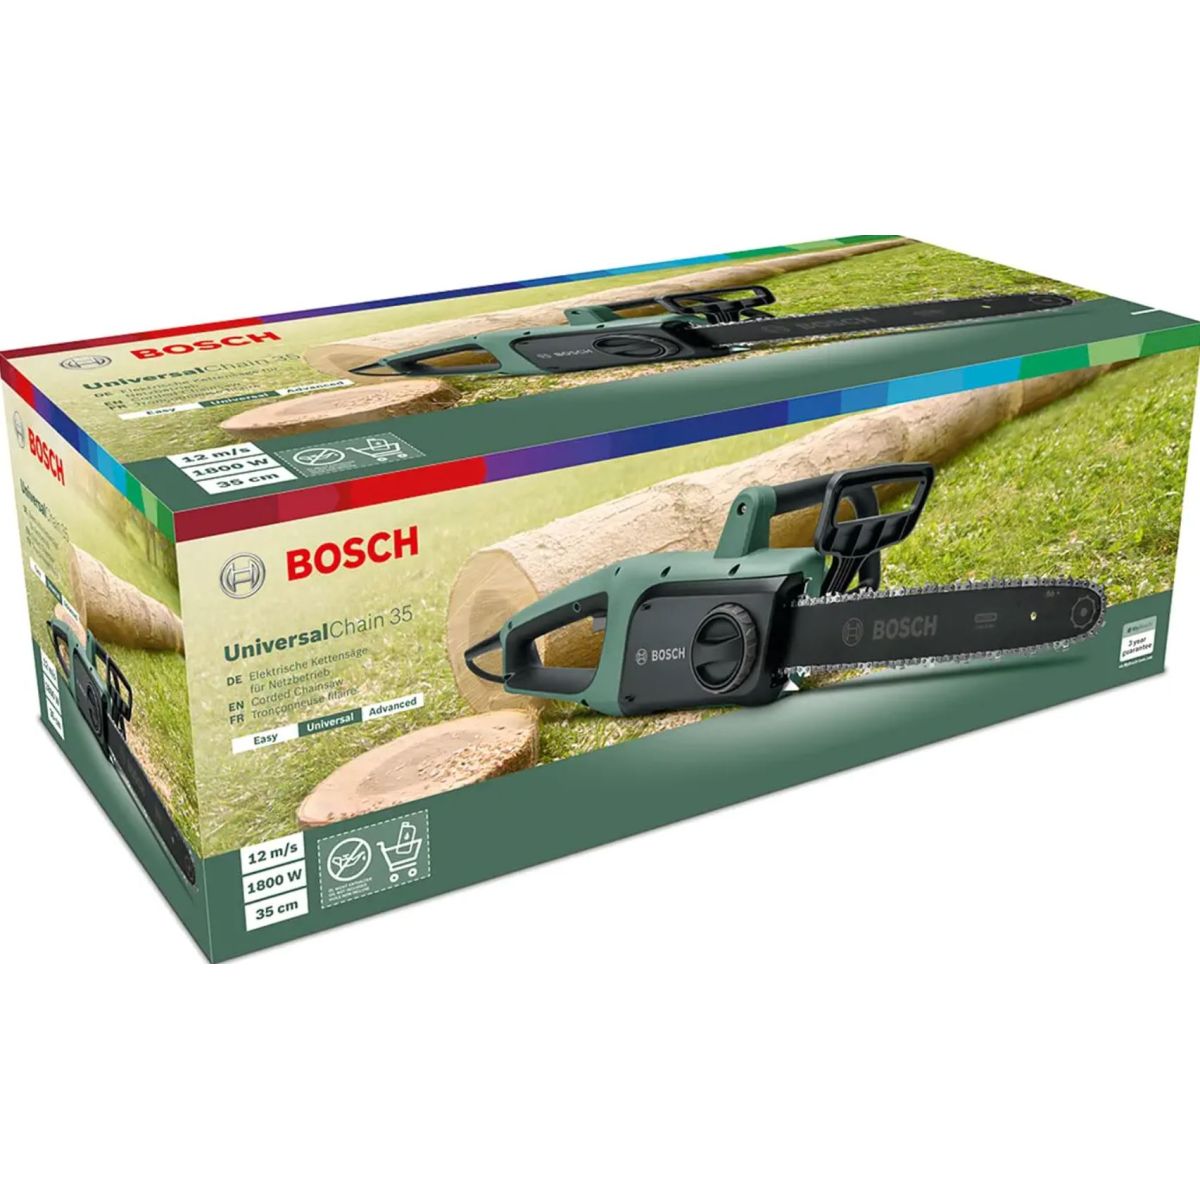 Tronçonneuse à chaîne Bosch - Universal-Chain 35 - 1800w - Bosch